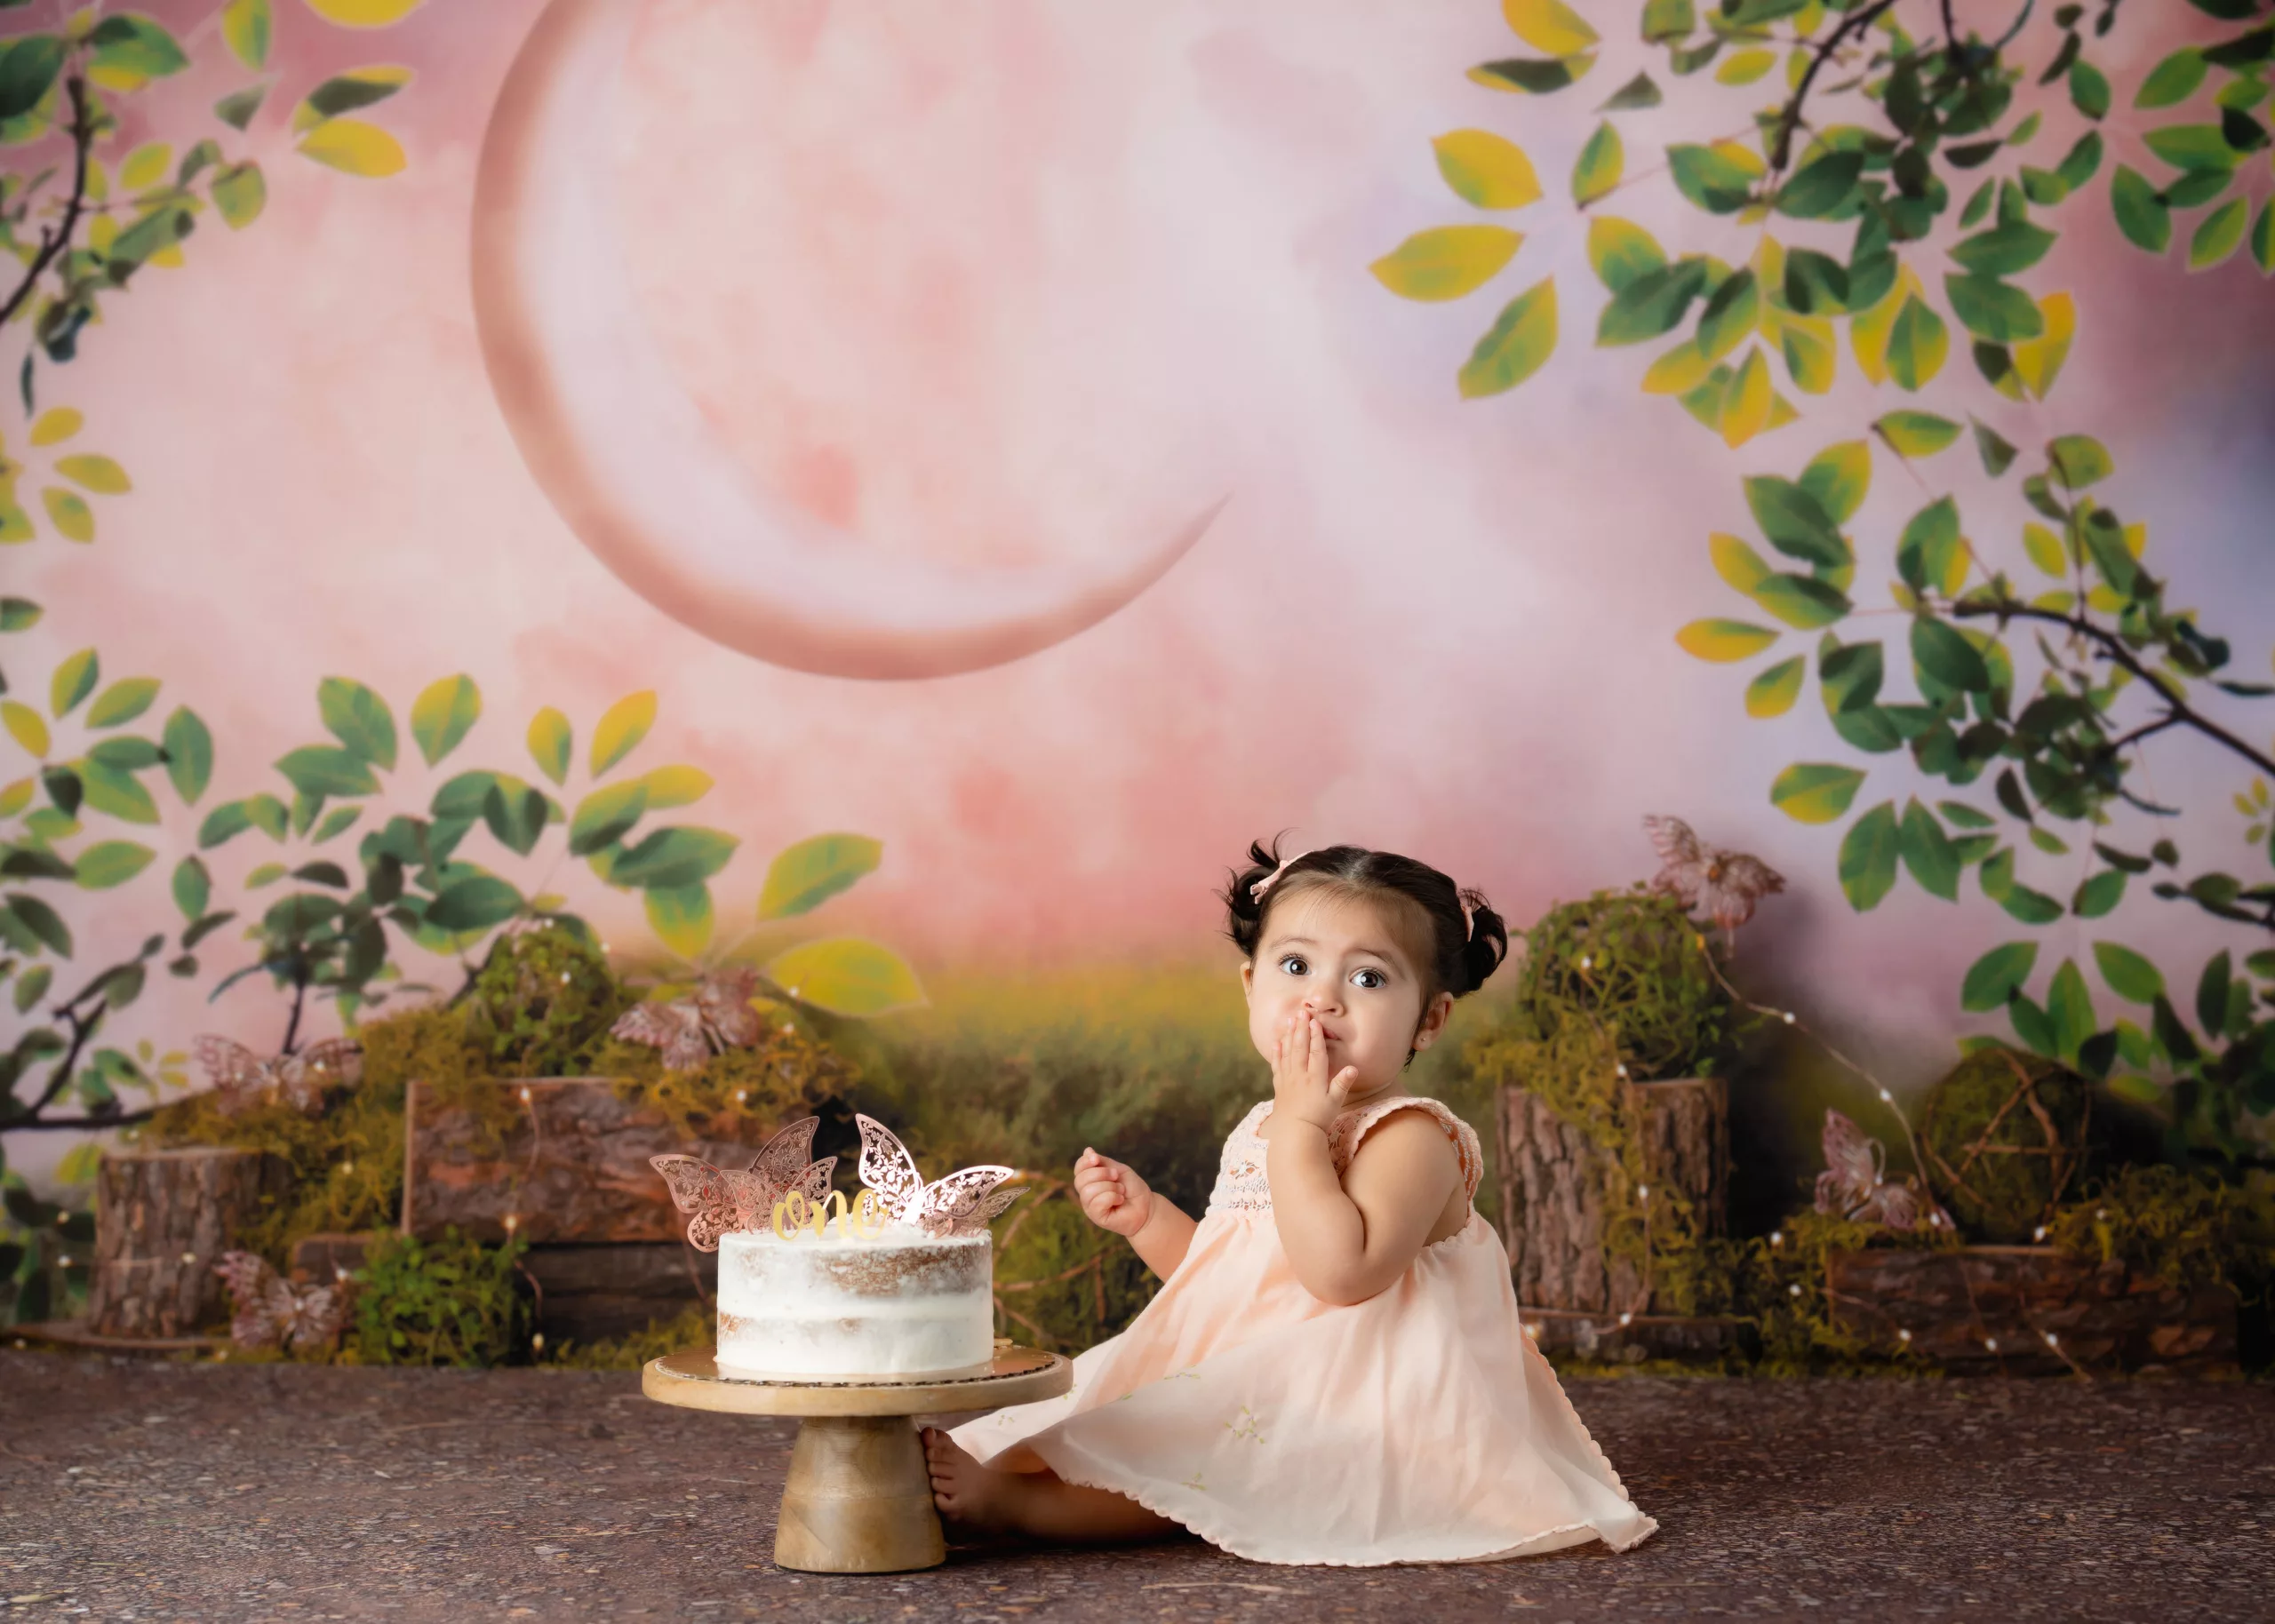 Orlando Girl Cake Smash 1st Birthday Photographer Photo Studio fairy garden moon pink green wood dirt